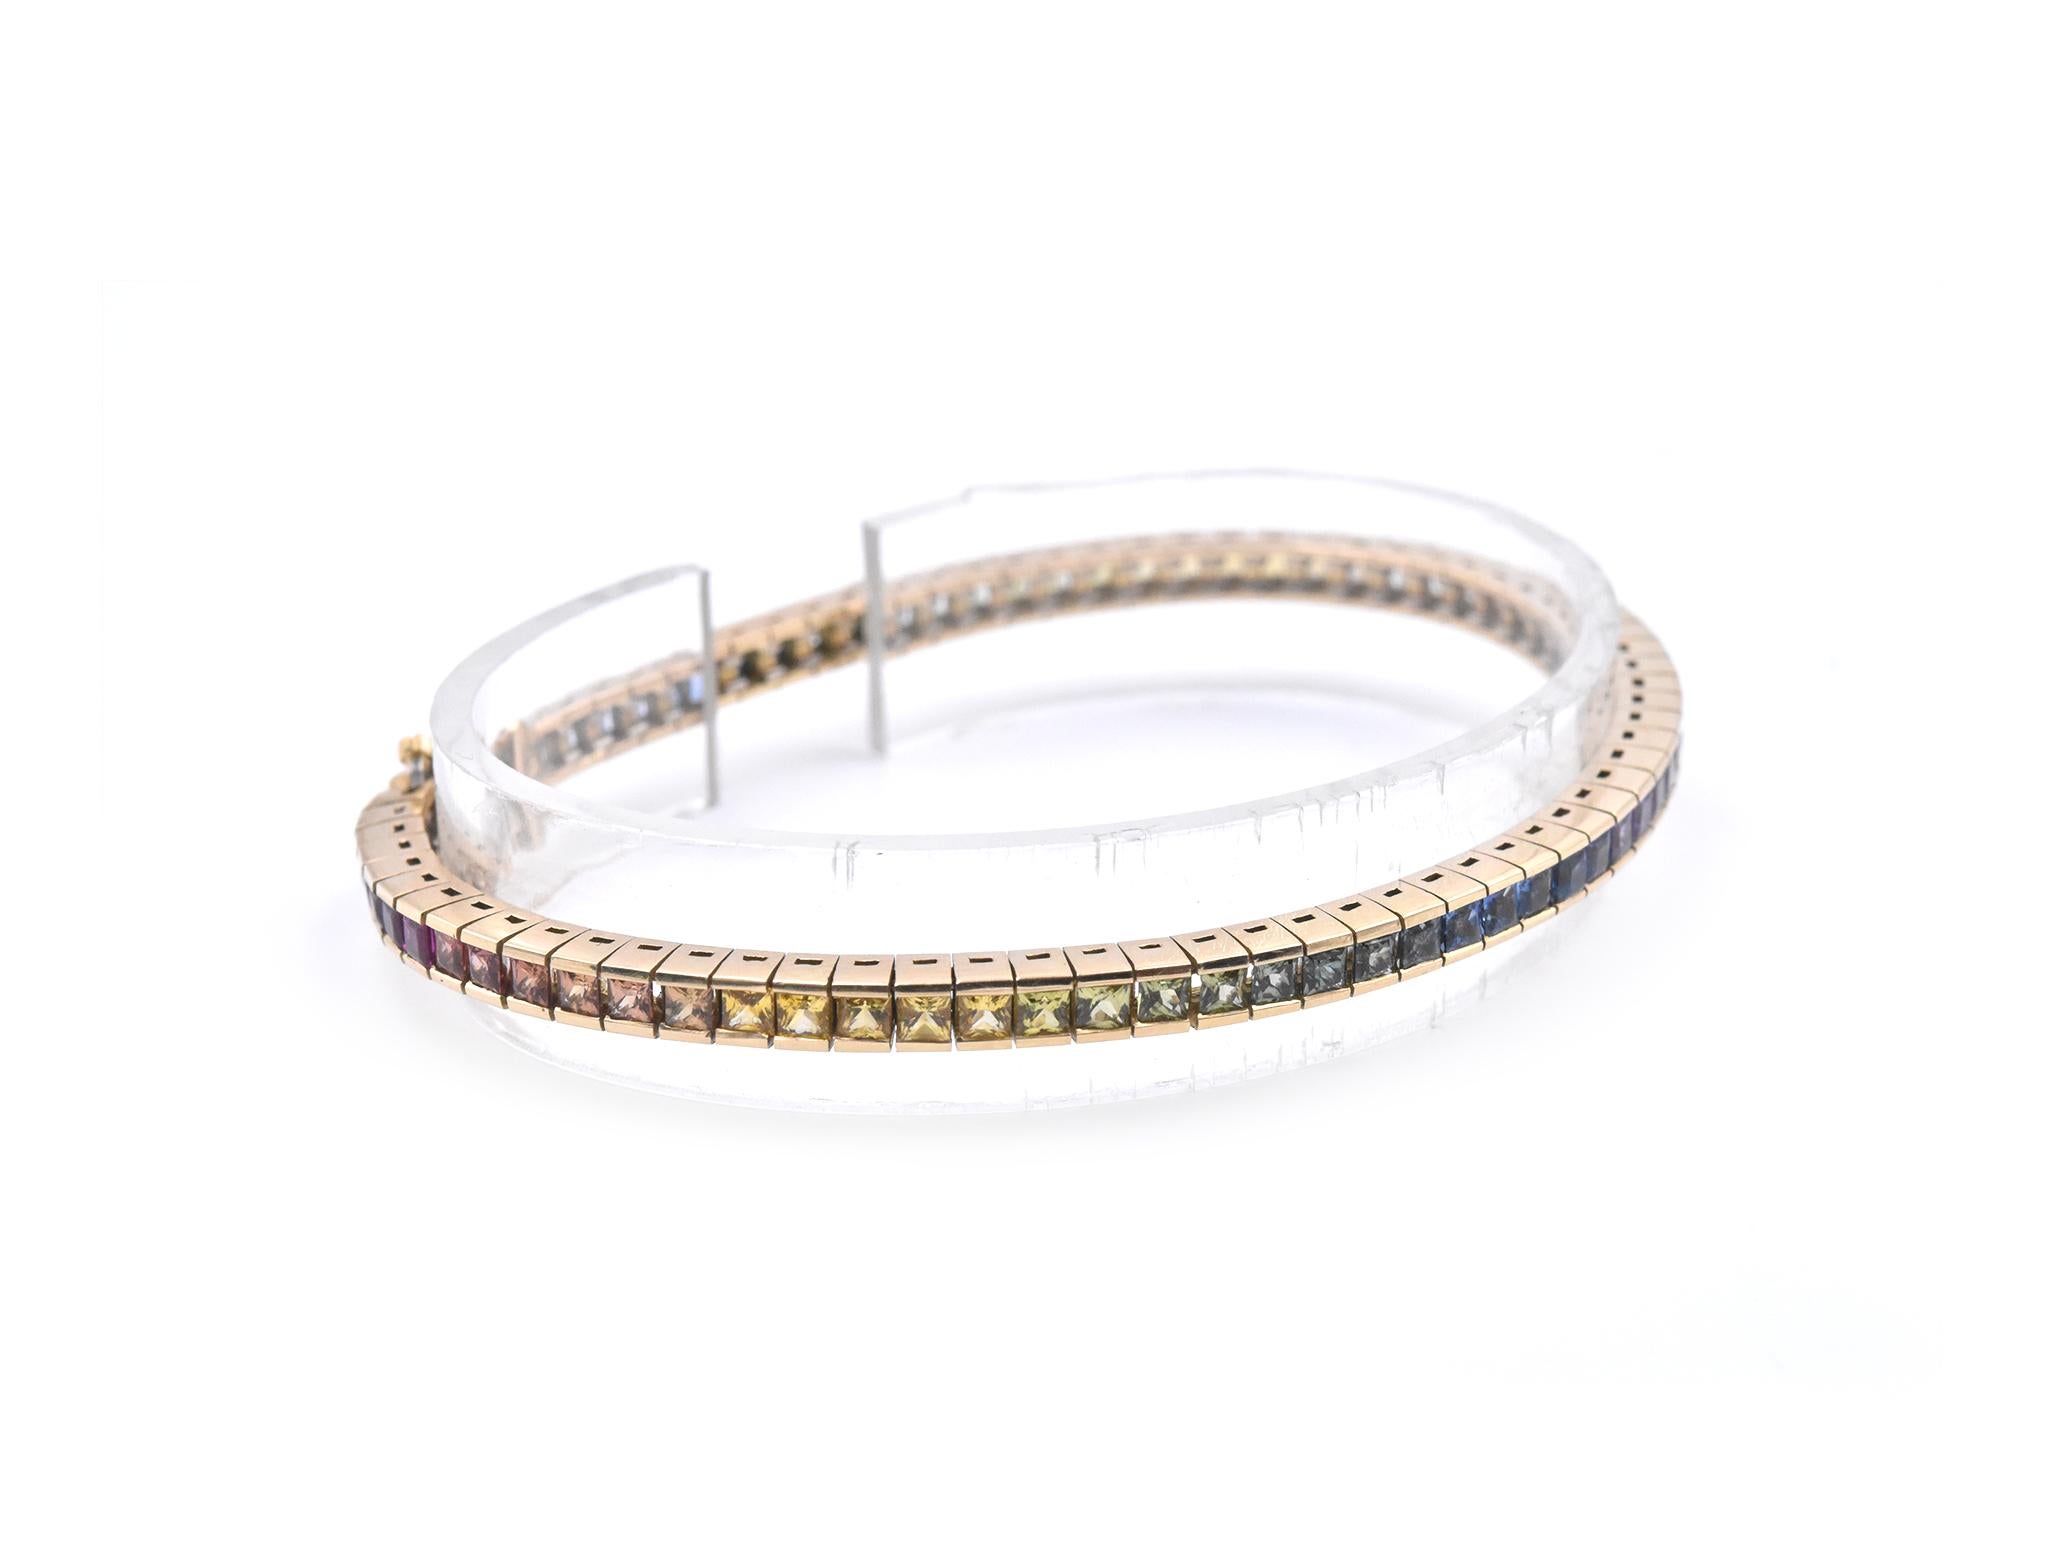 Designer: Custom
Material: 14K yellow gold
Gemstone: princess cut sapphires
Carat: 4.20cttw 
Dimensions: bracelet will fit a 7-inch wrist
Weight: 17.27 grams